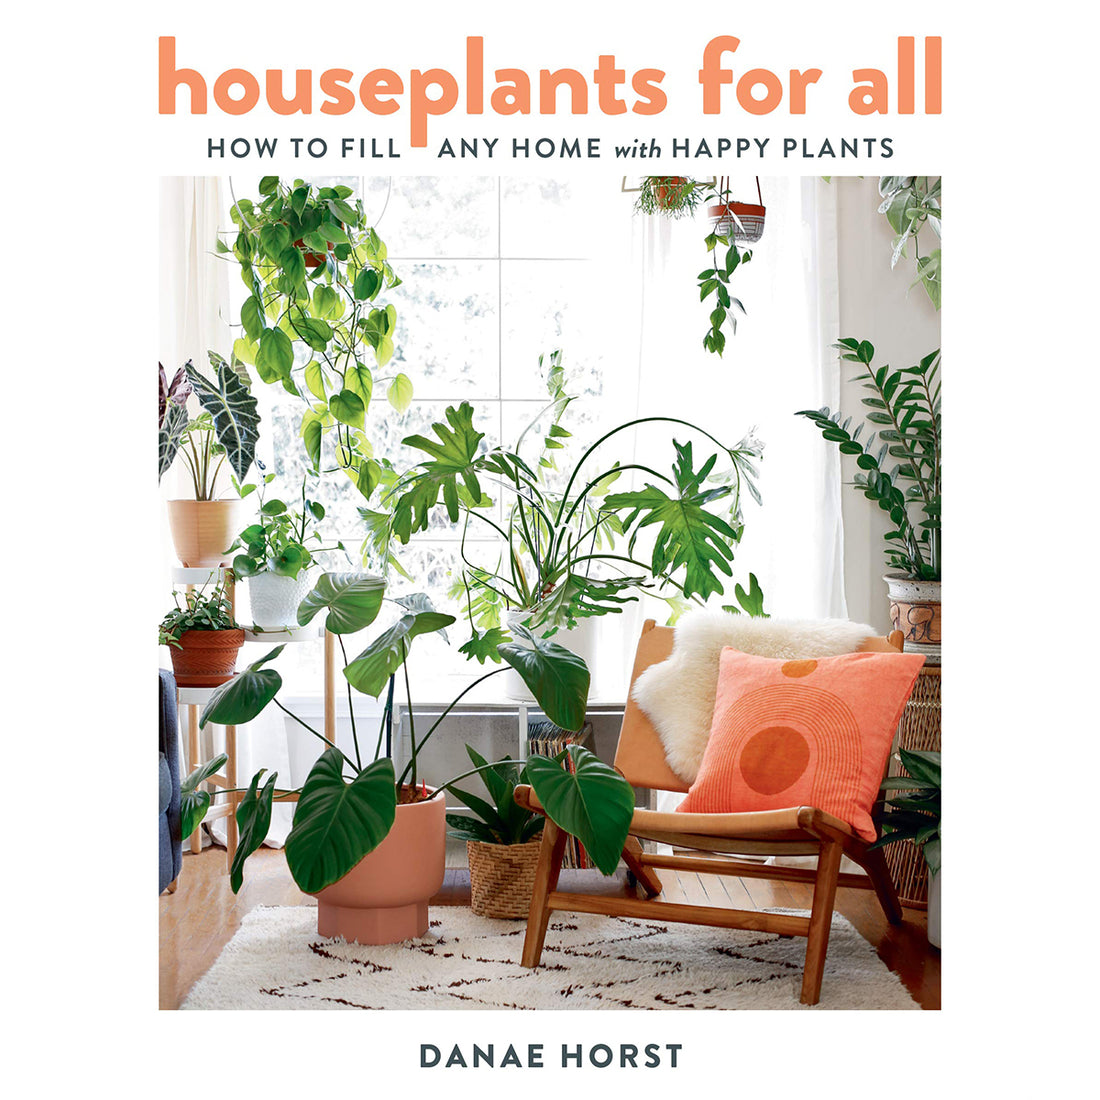 Houseplants for All by Danae Horst